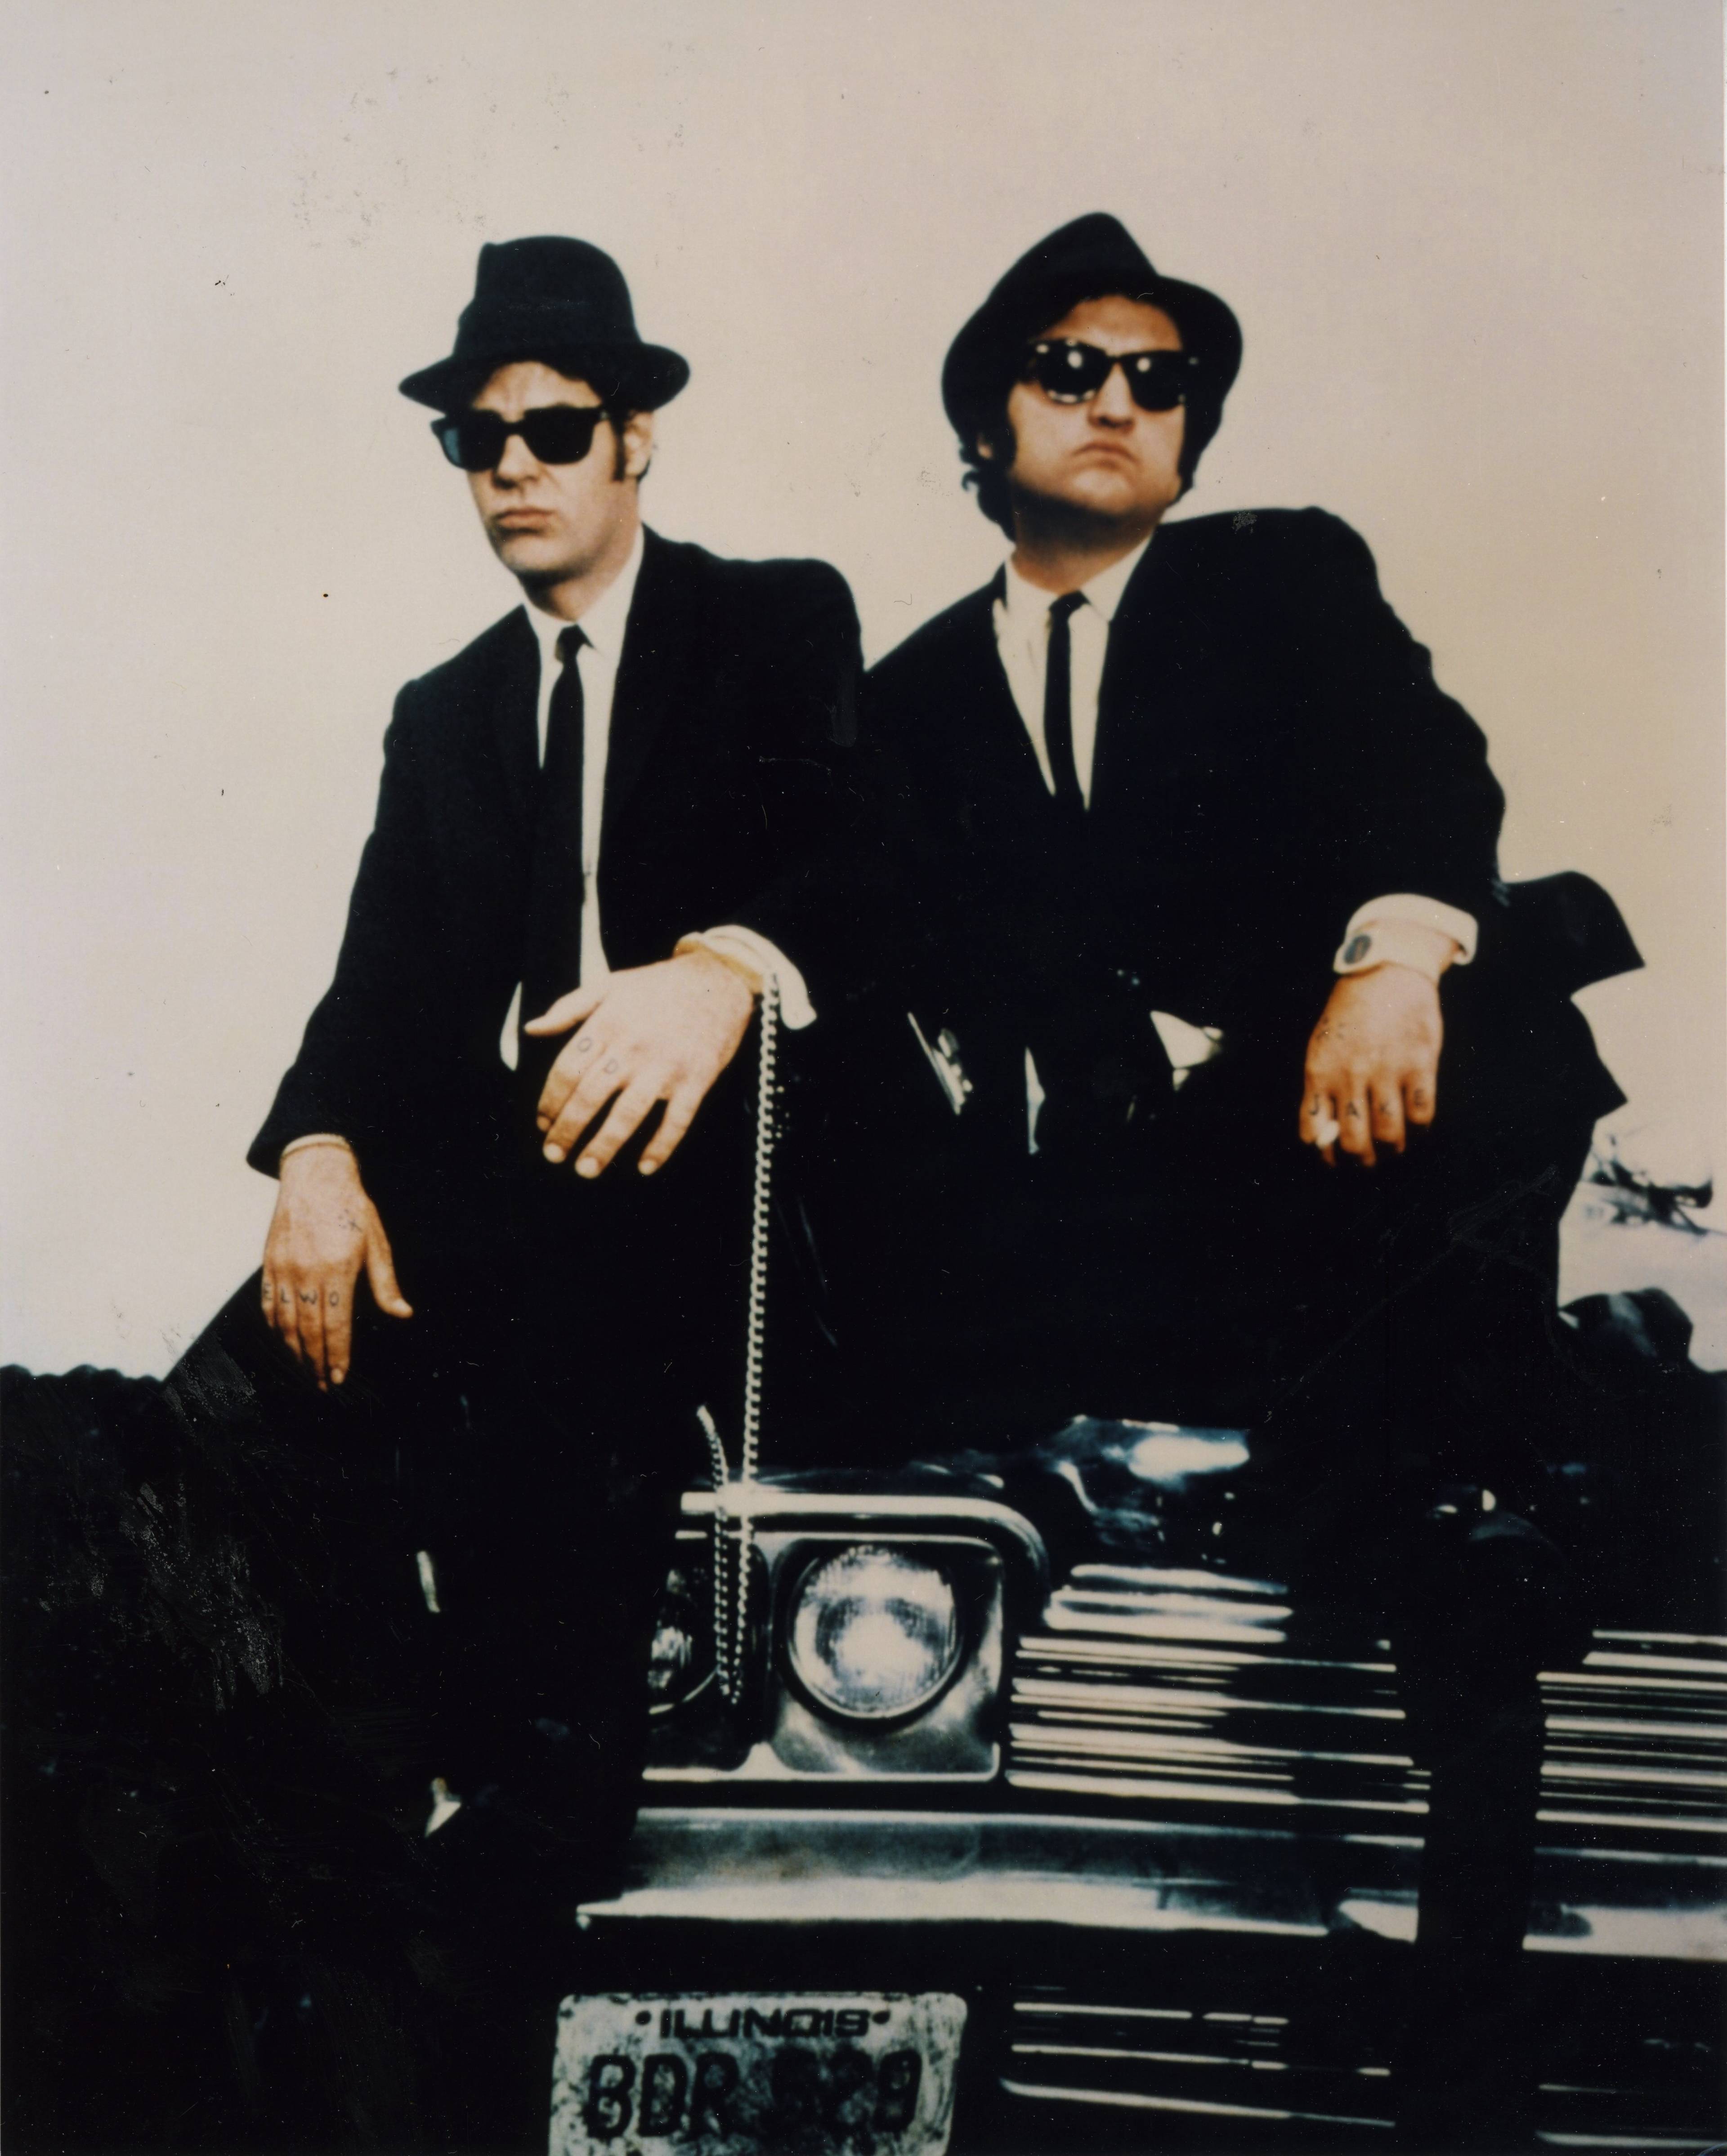 Dan Aykroyd and John Belushi in "The Blues Brothers"